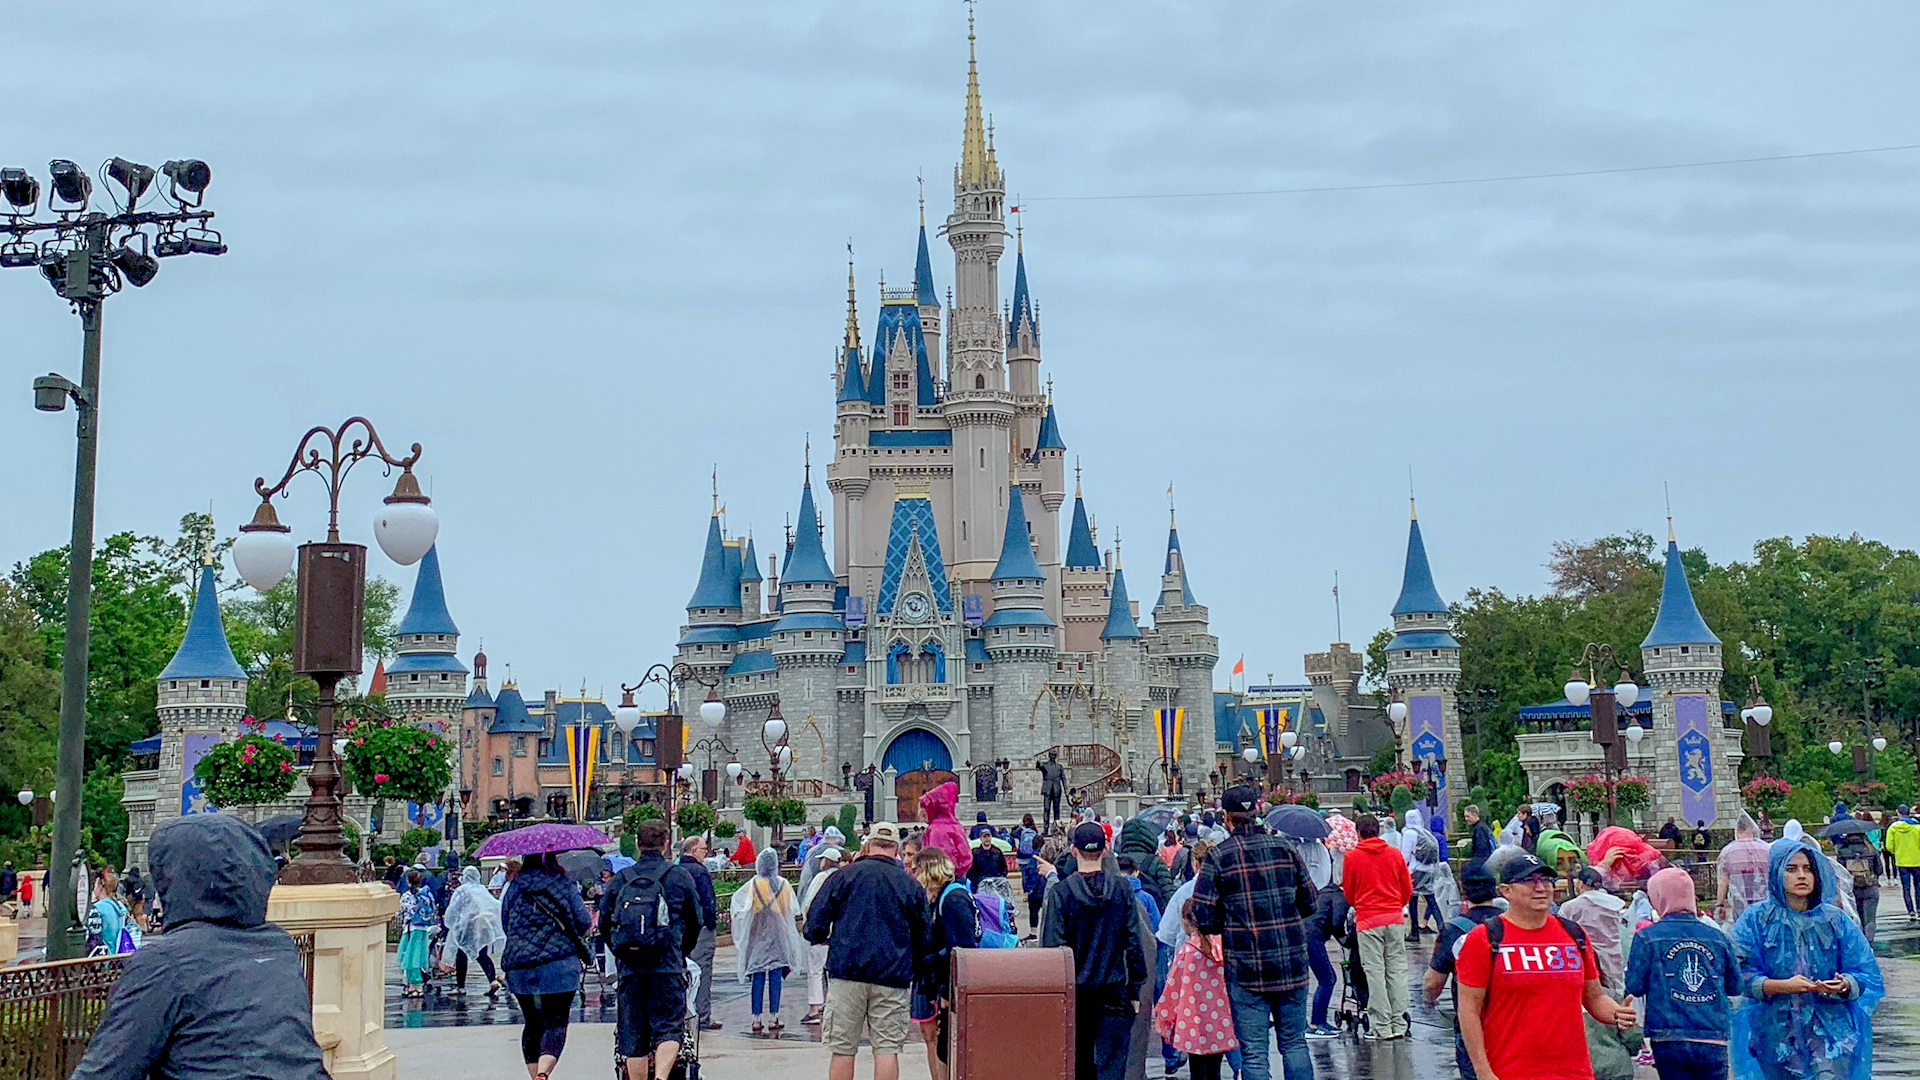 Disney World's Magic Kingdom castle